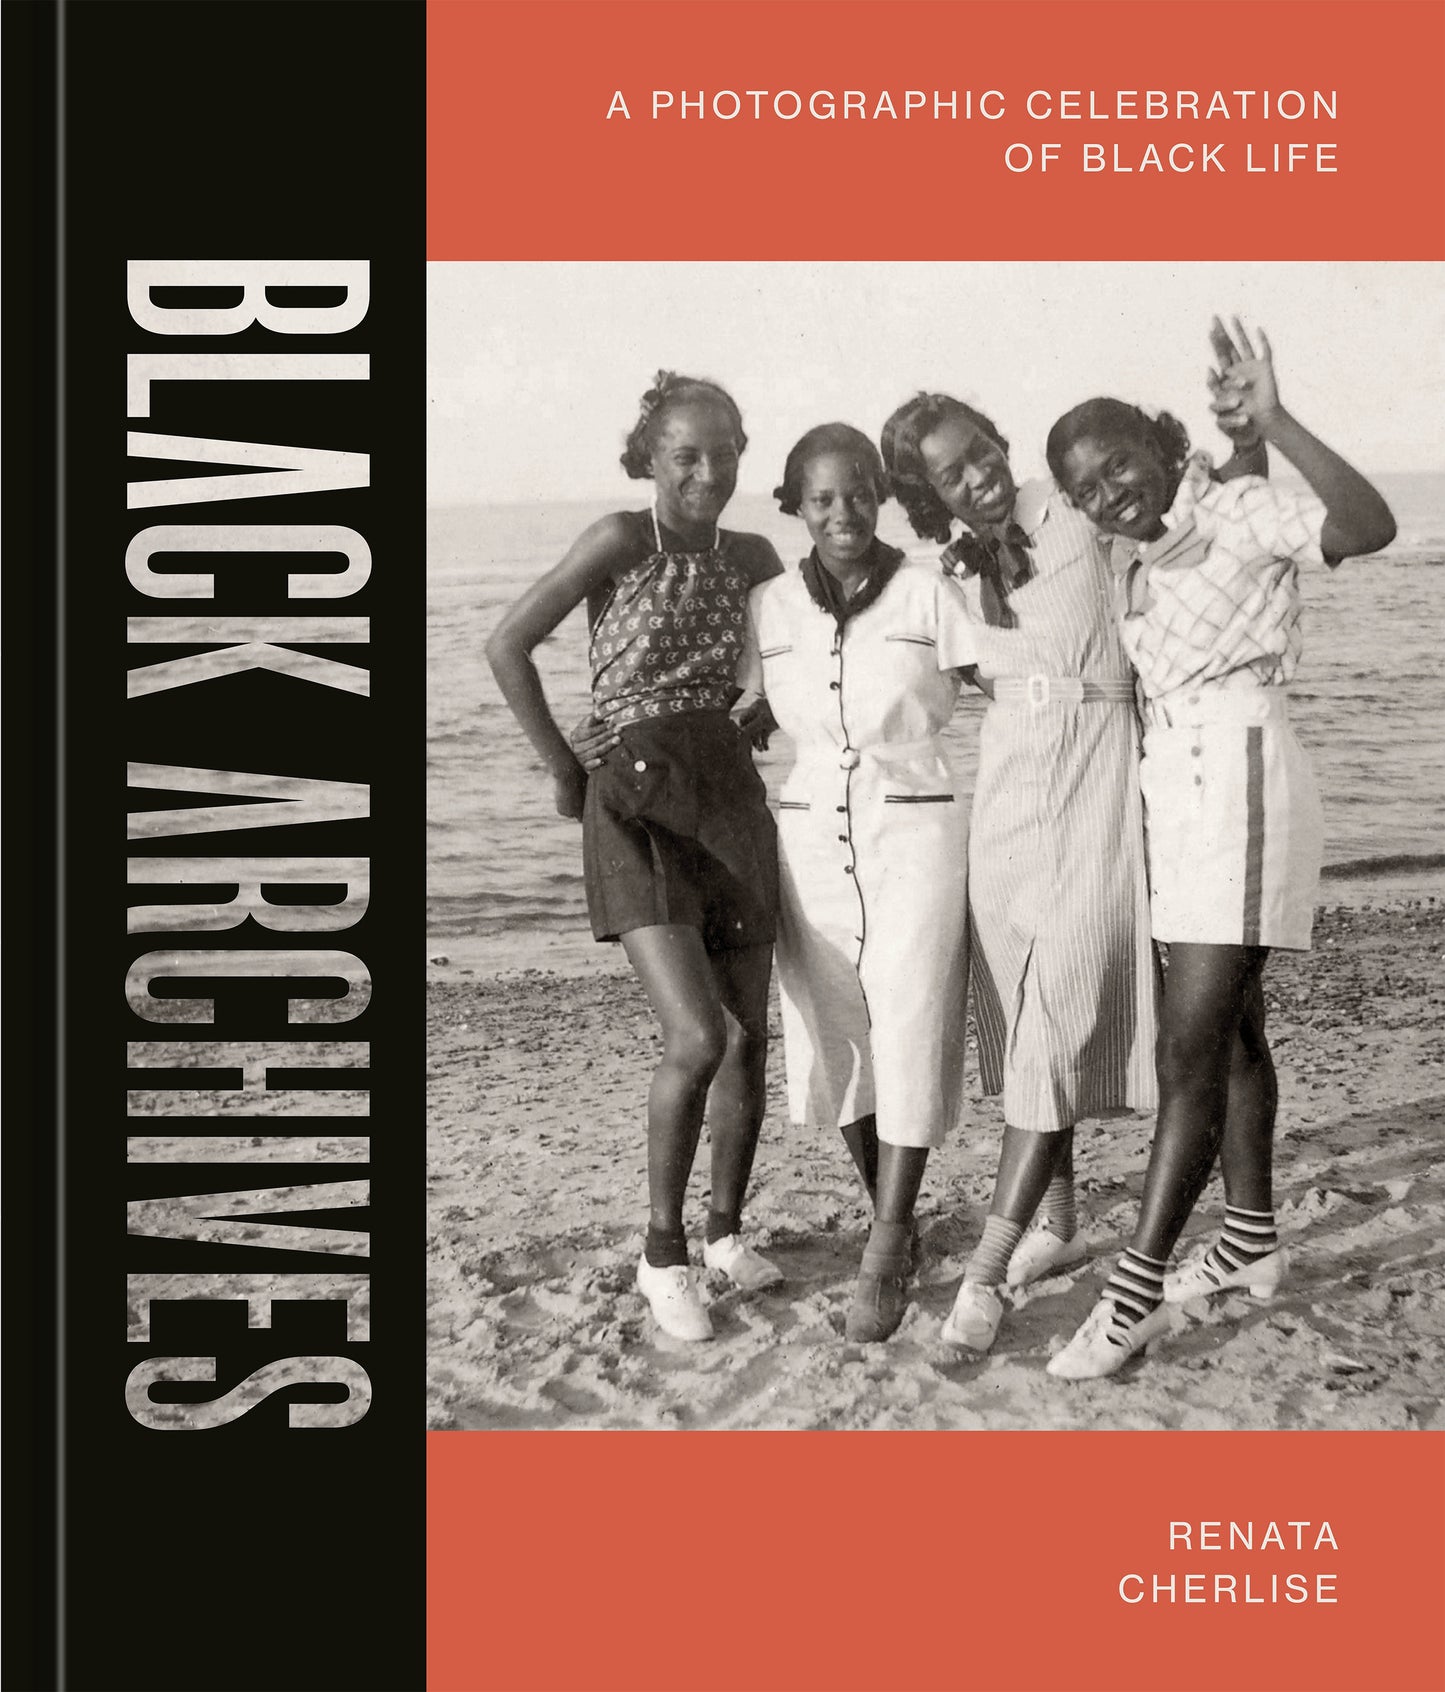 Black Archives // A Photographic Celebration of Black Life